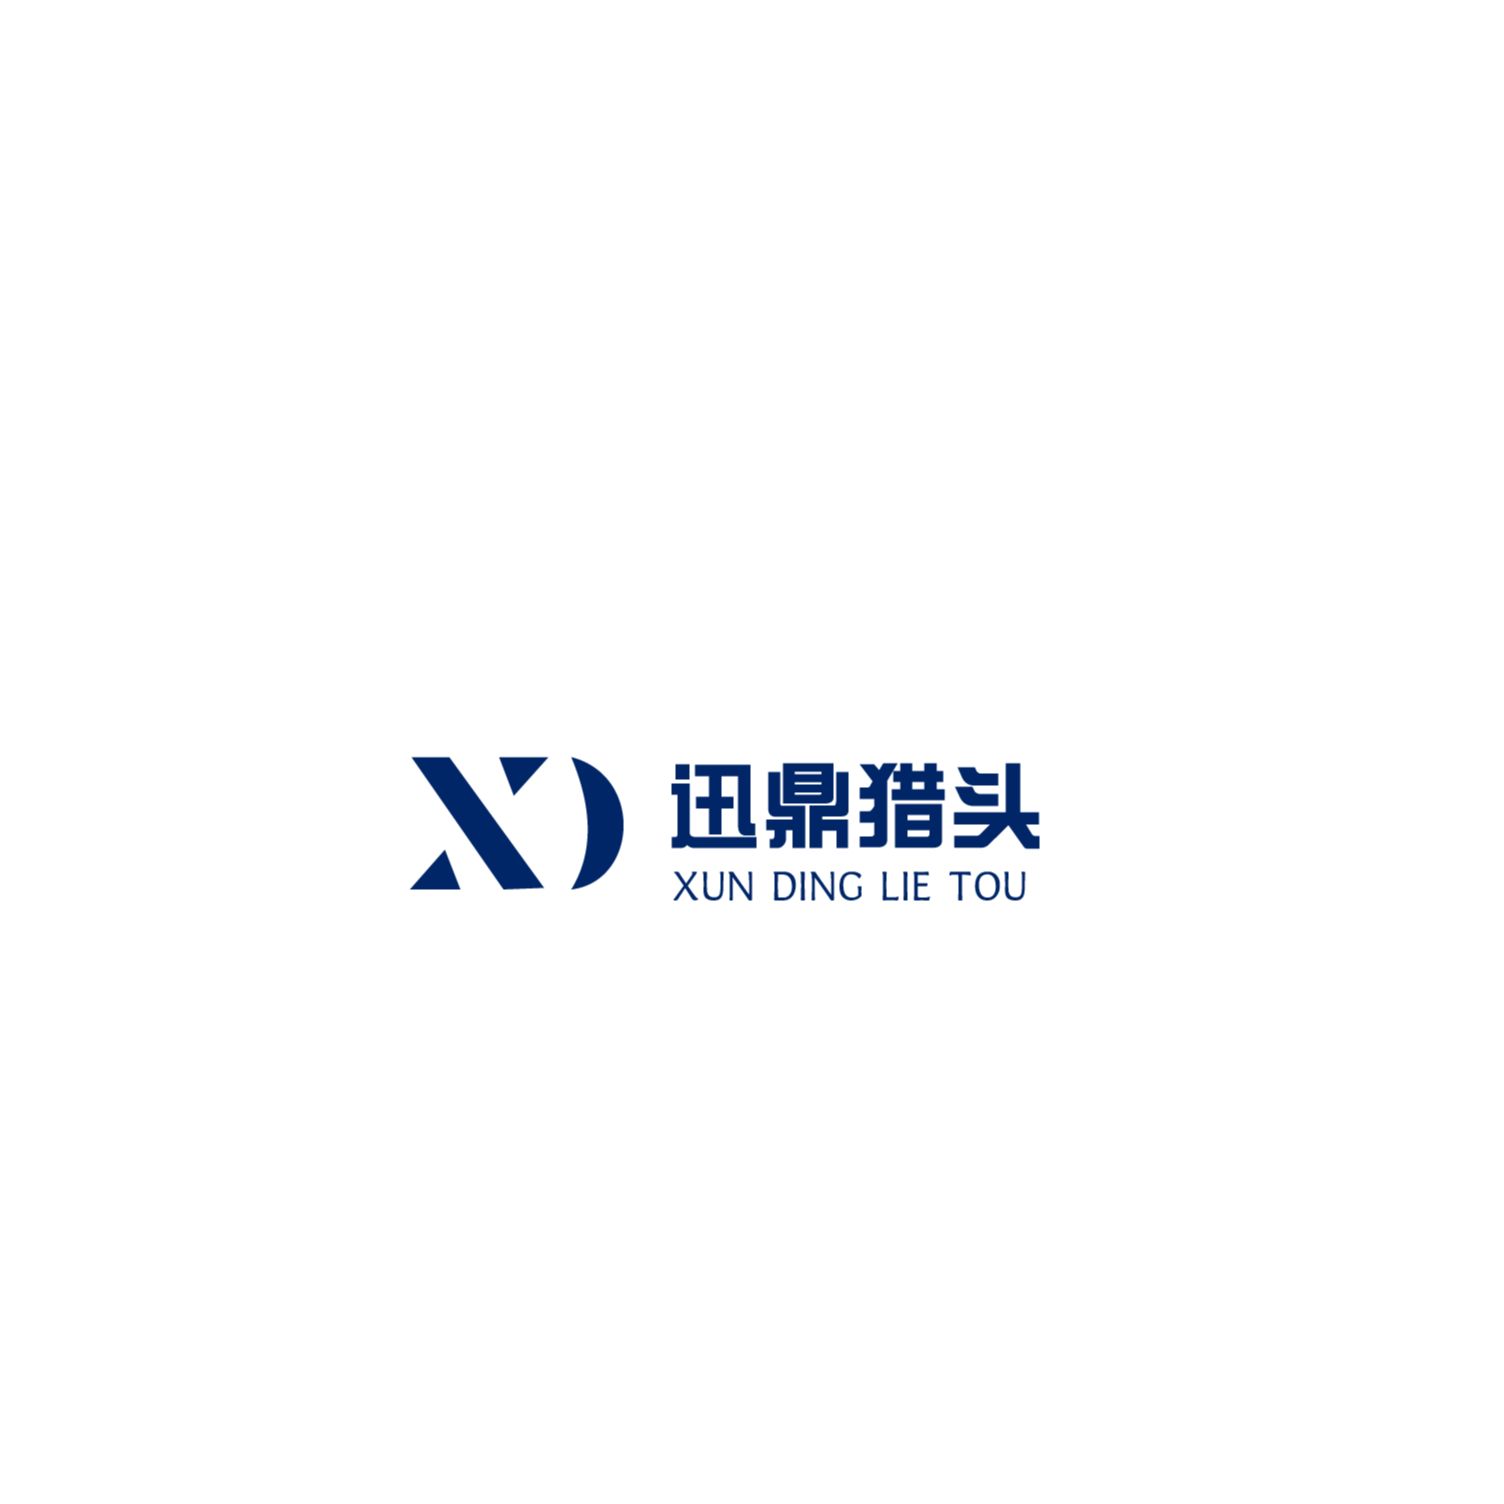 Xunding logo